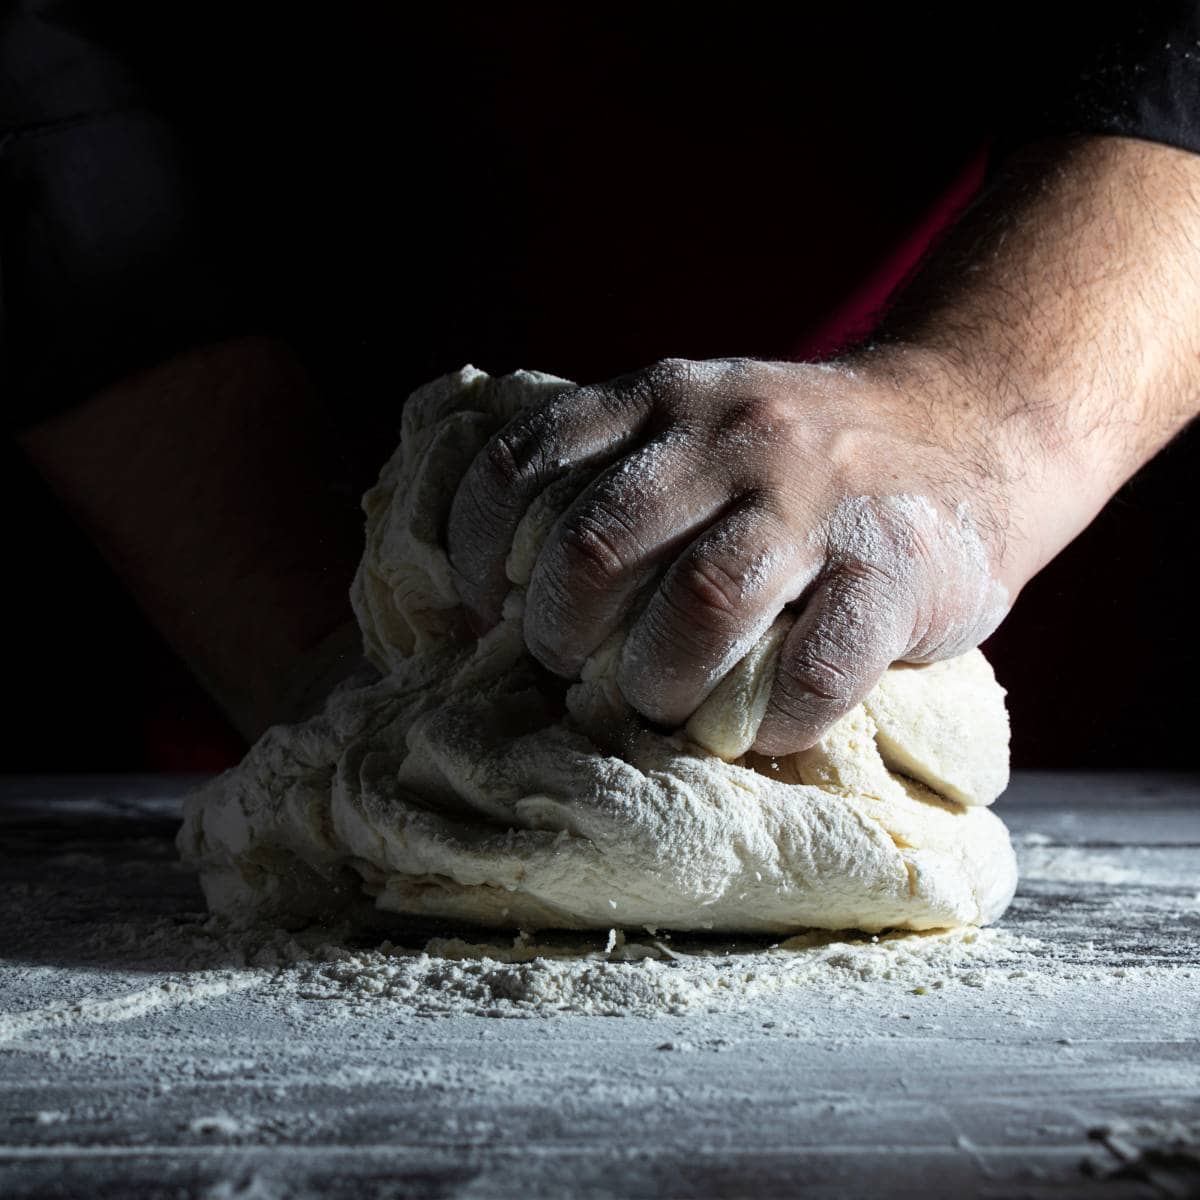 A man is kneading pinsa dough on a table.